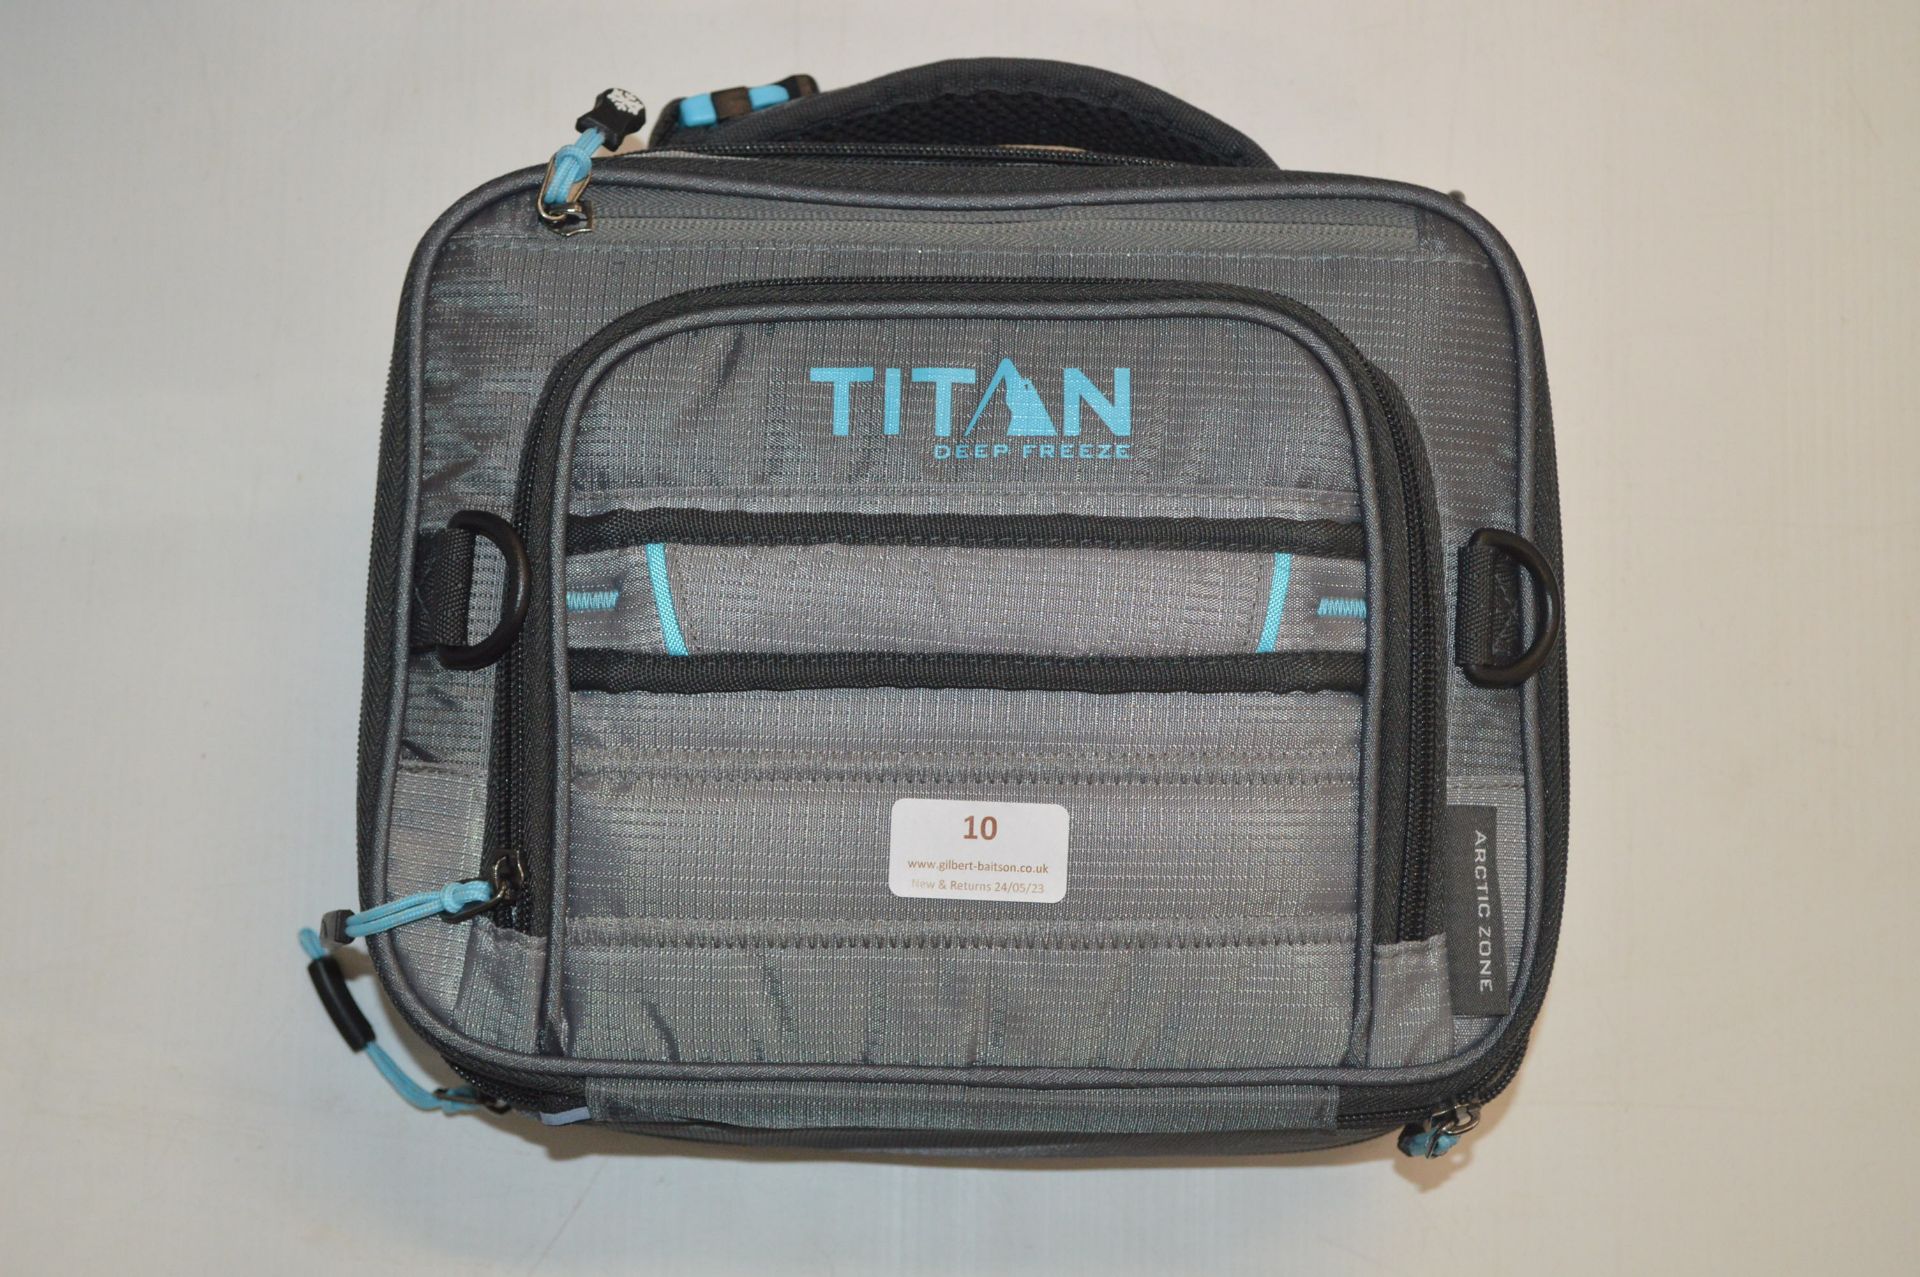 *Titan Expanding Cool Pack